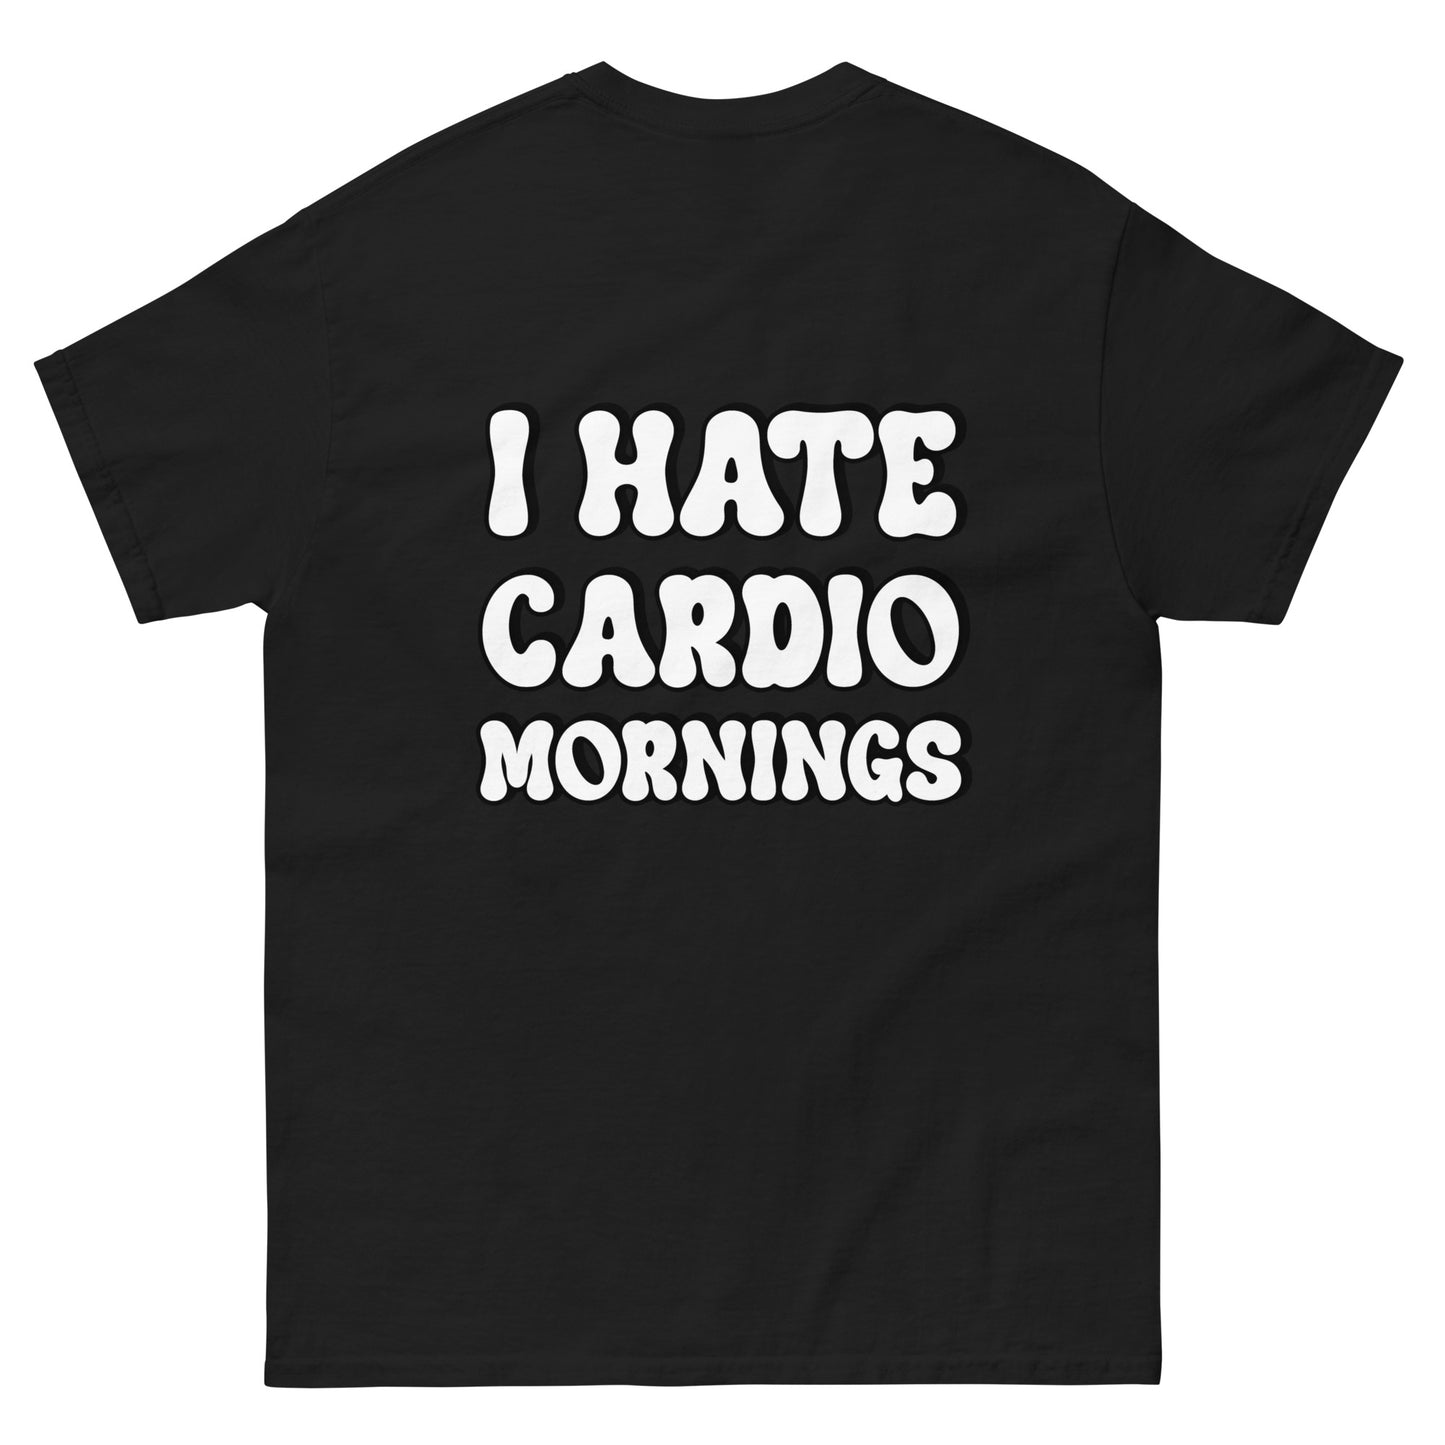 "Cardio mornings" - Classic T-Shirt